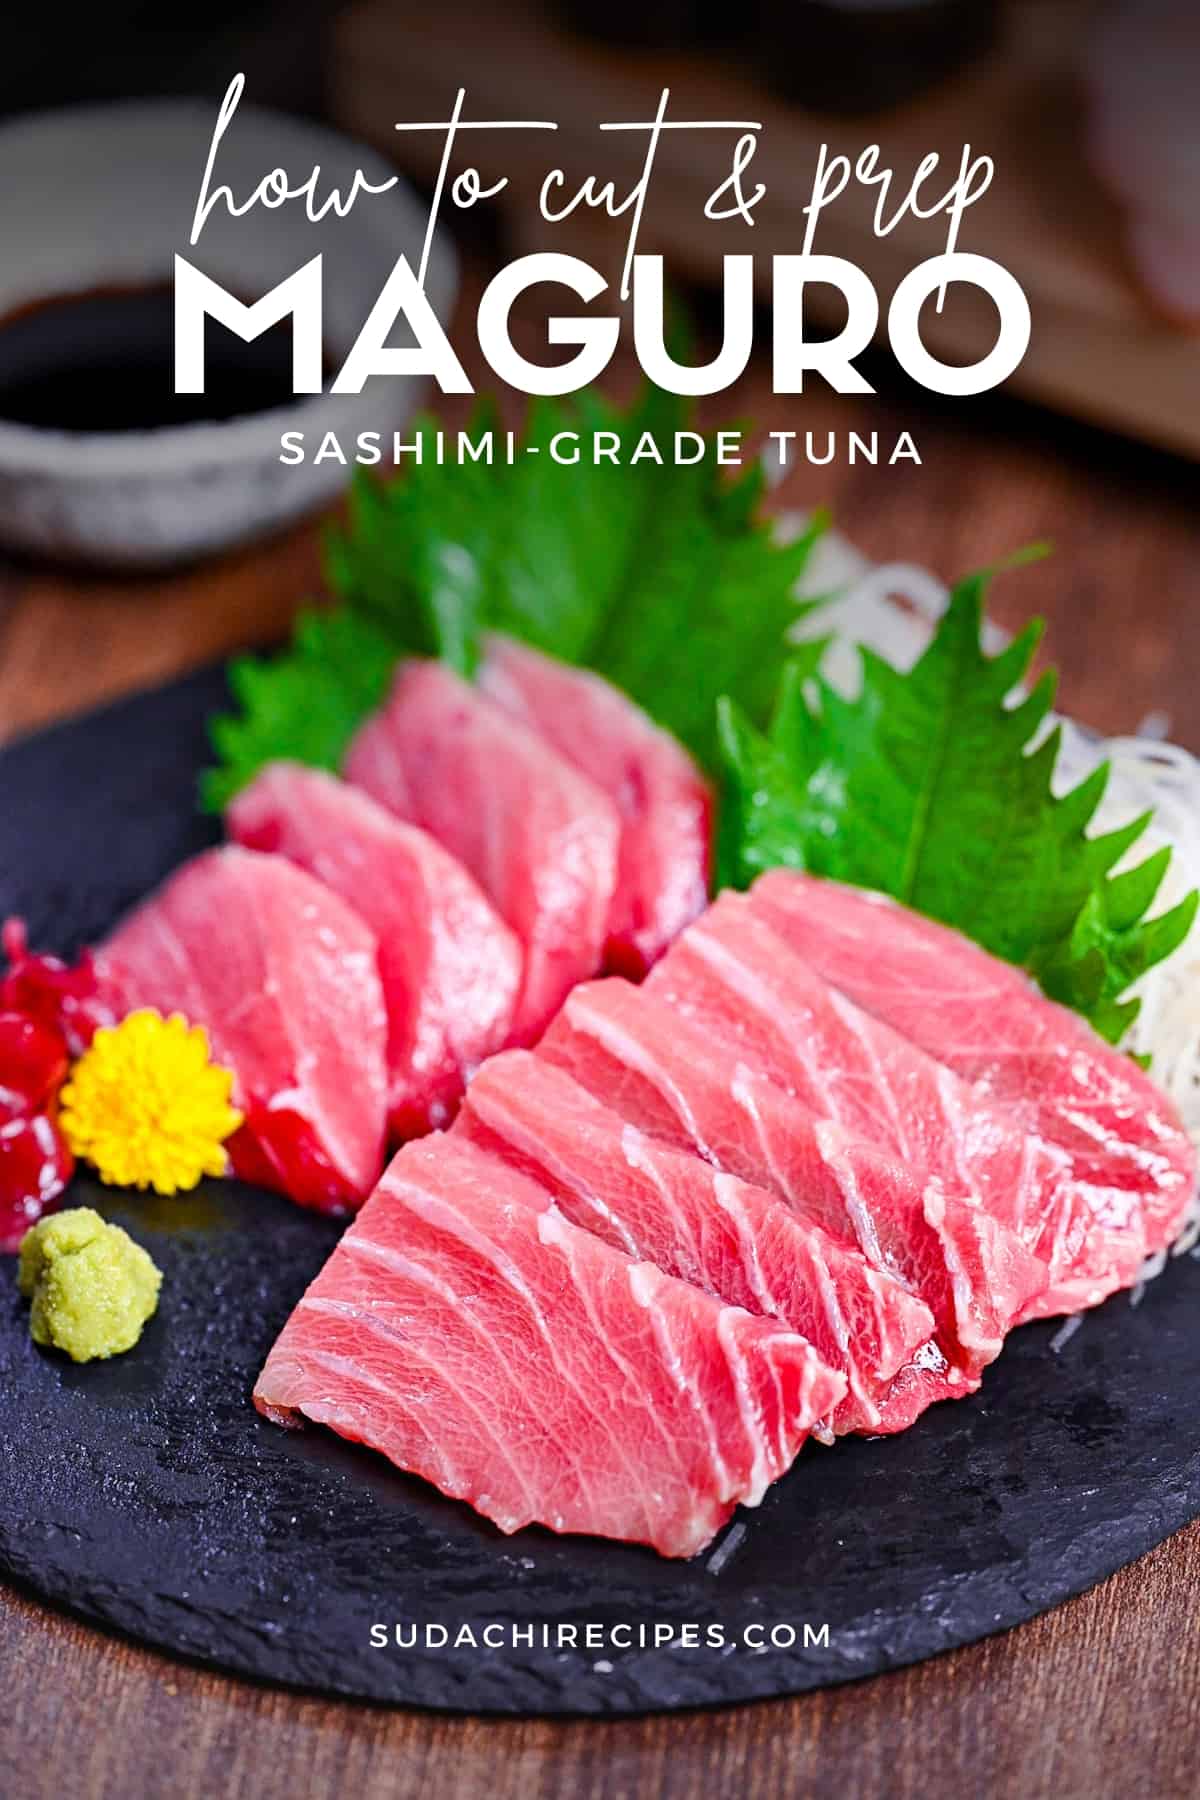 fresh pieces of sashimi-grade tuna (maguro) on a round slate plate with shiso leaves, shredded daikon, wasabi and seaweed